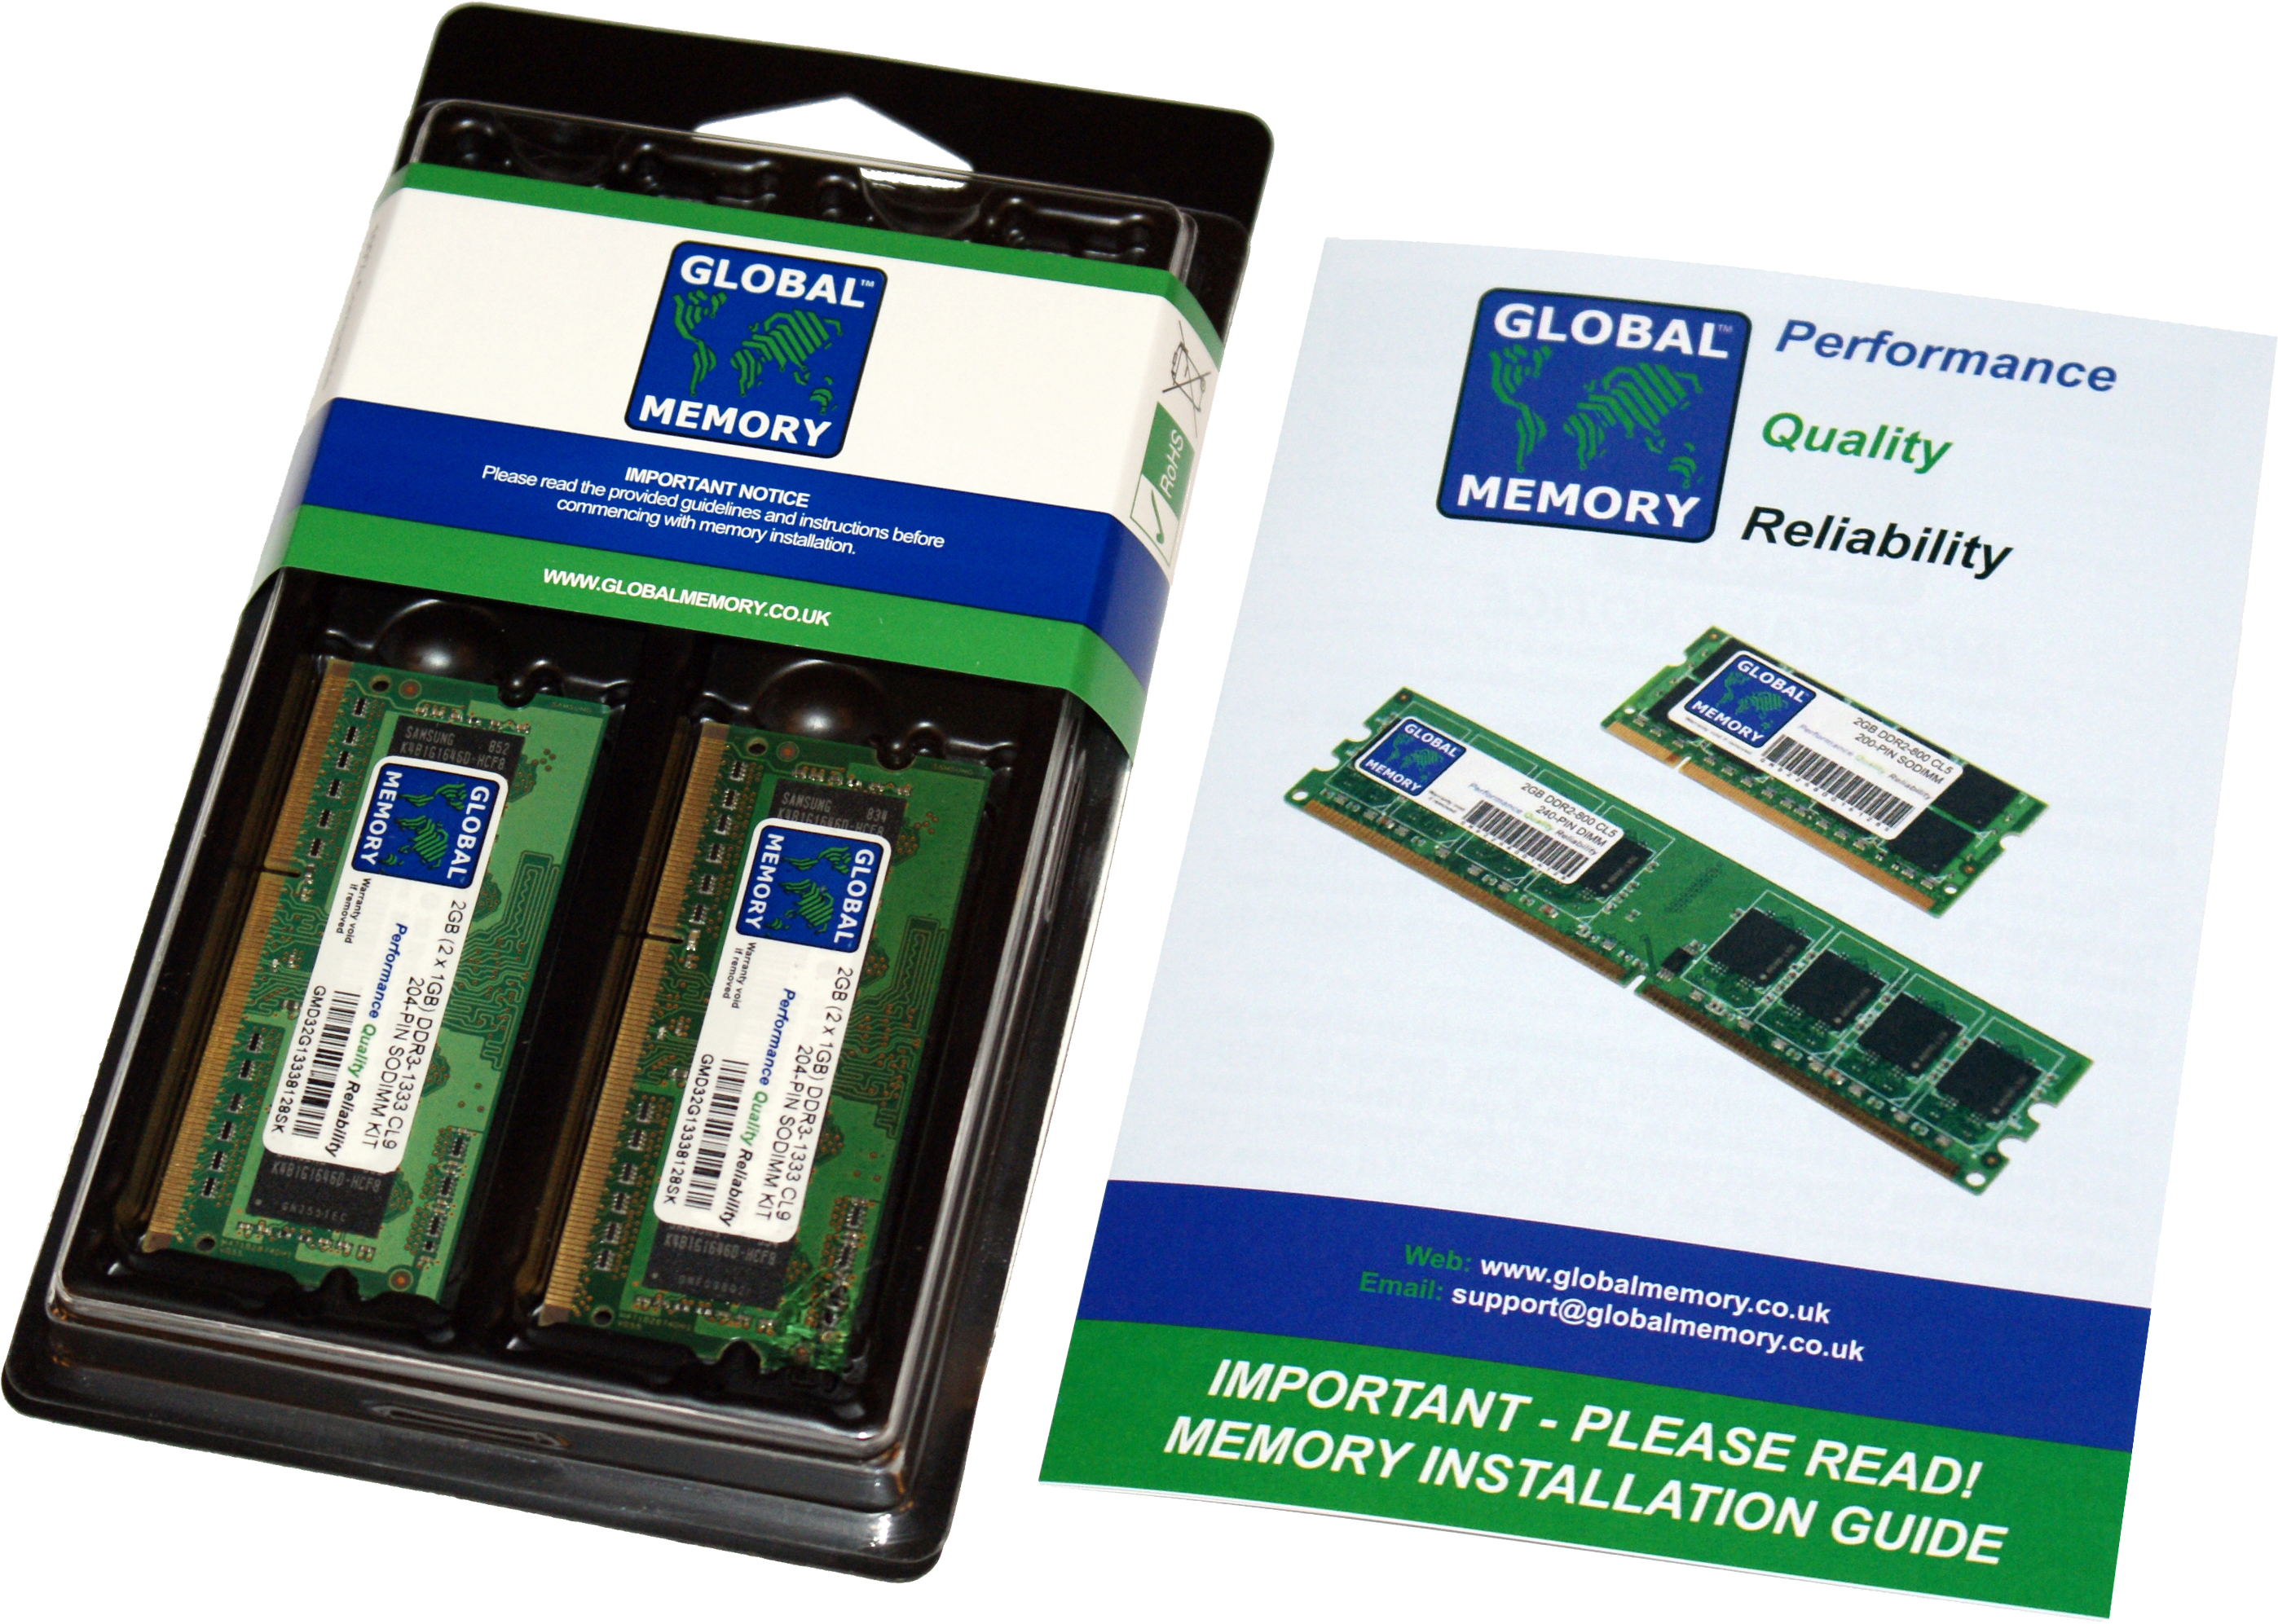 8GB (2 x 4GB) DDR4 2133MHz PC4-17000 260-PIN SODIMM MEMORY RAM KIT FOR LAPTOPS/NOTEBOOKS